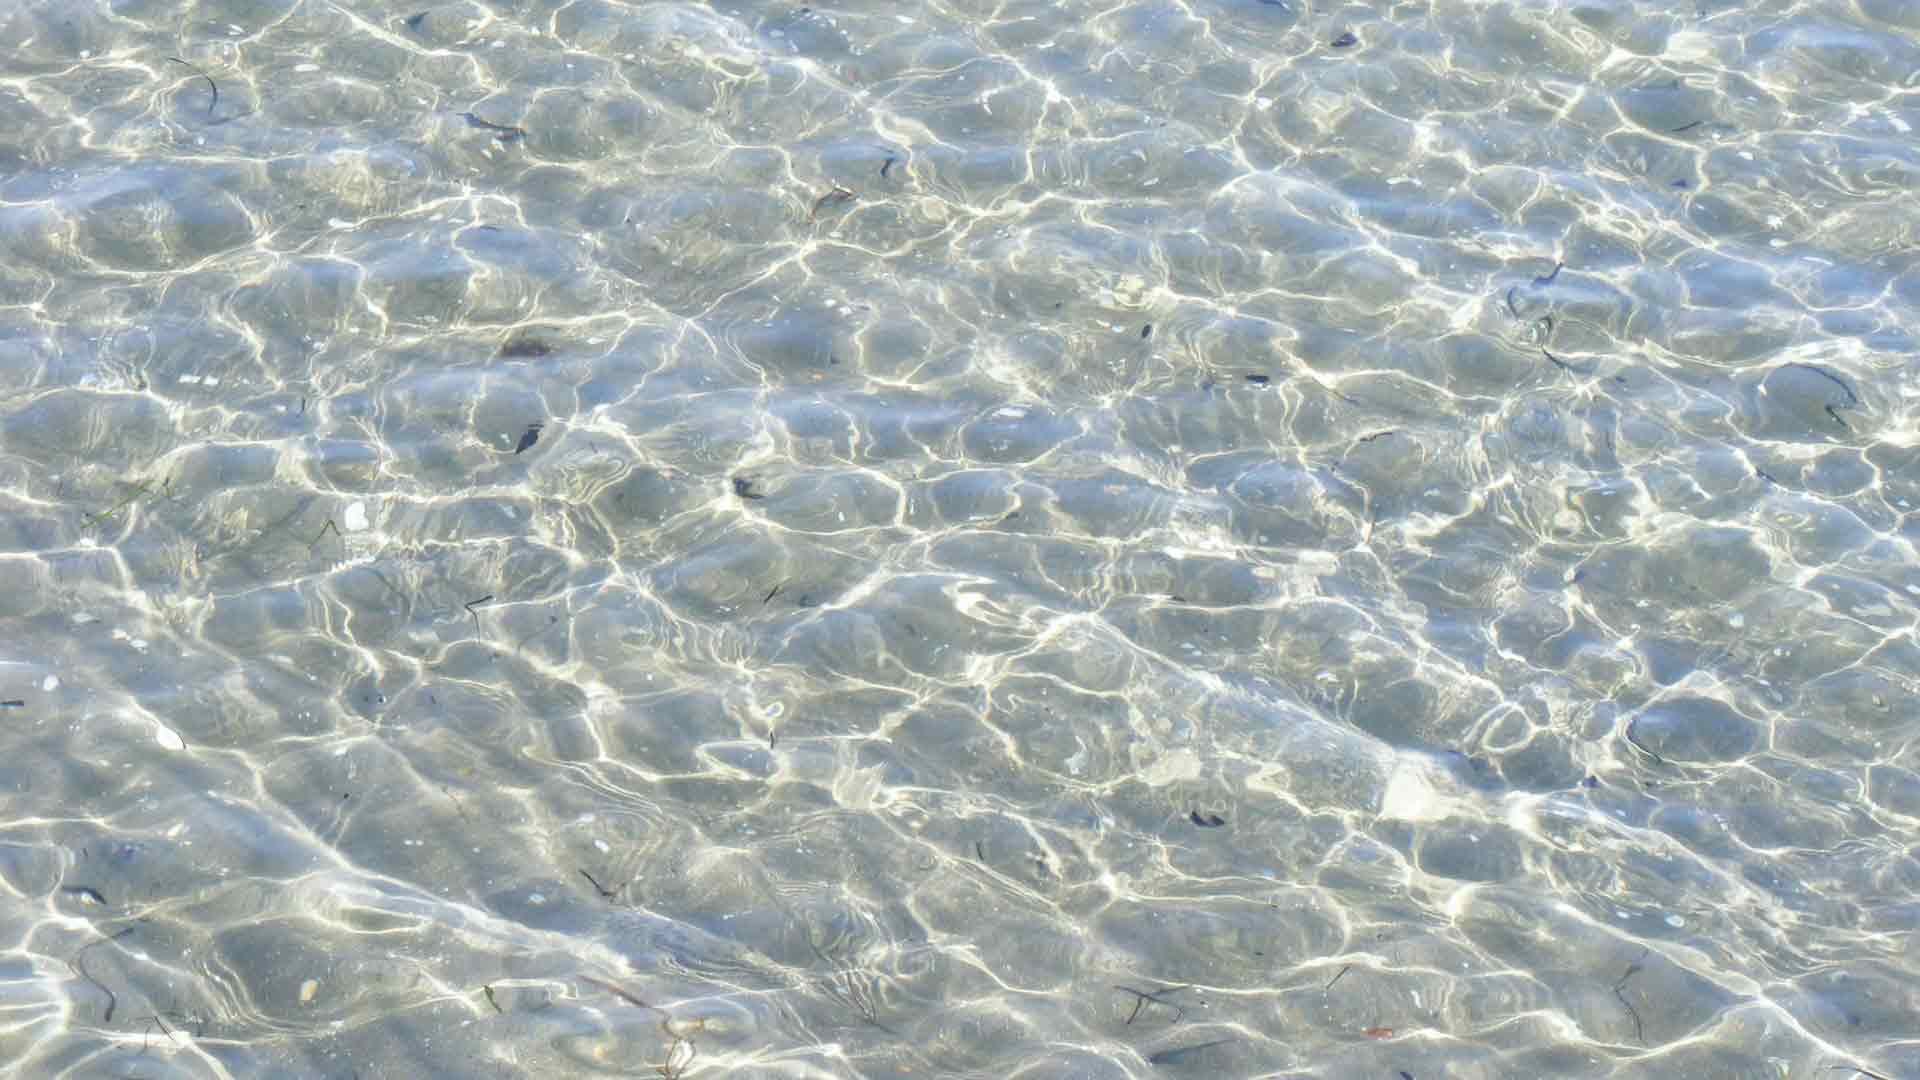 Pellestrina - La spiaggia